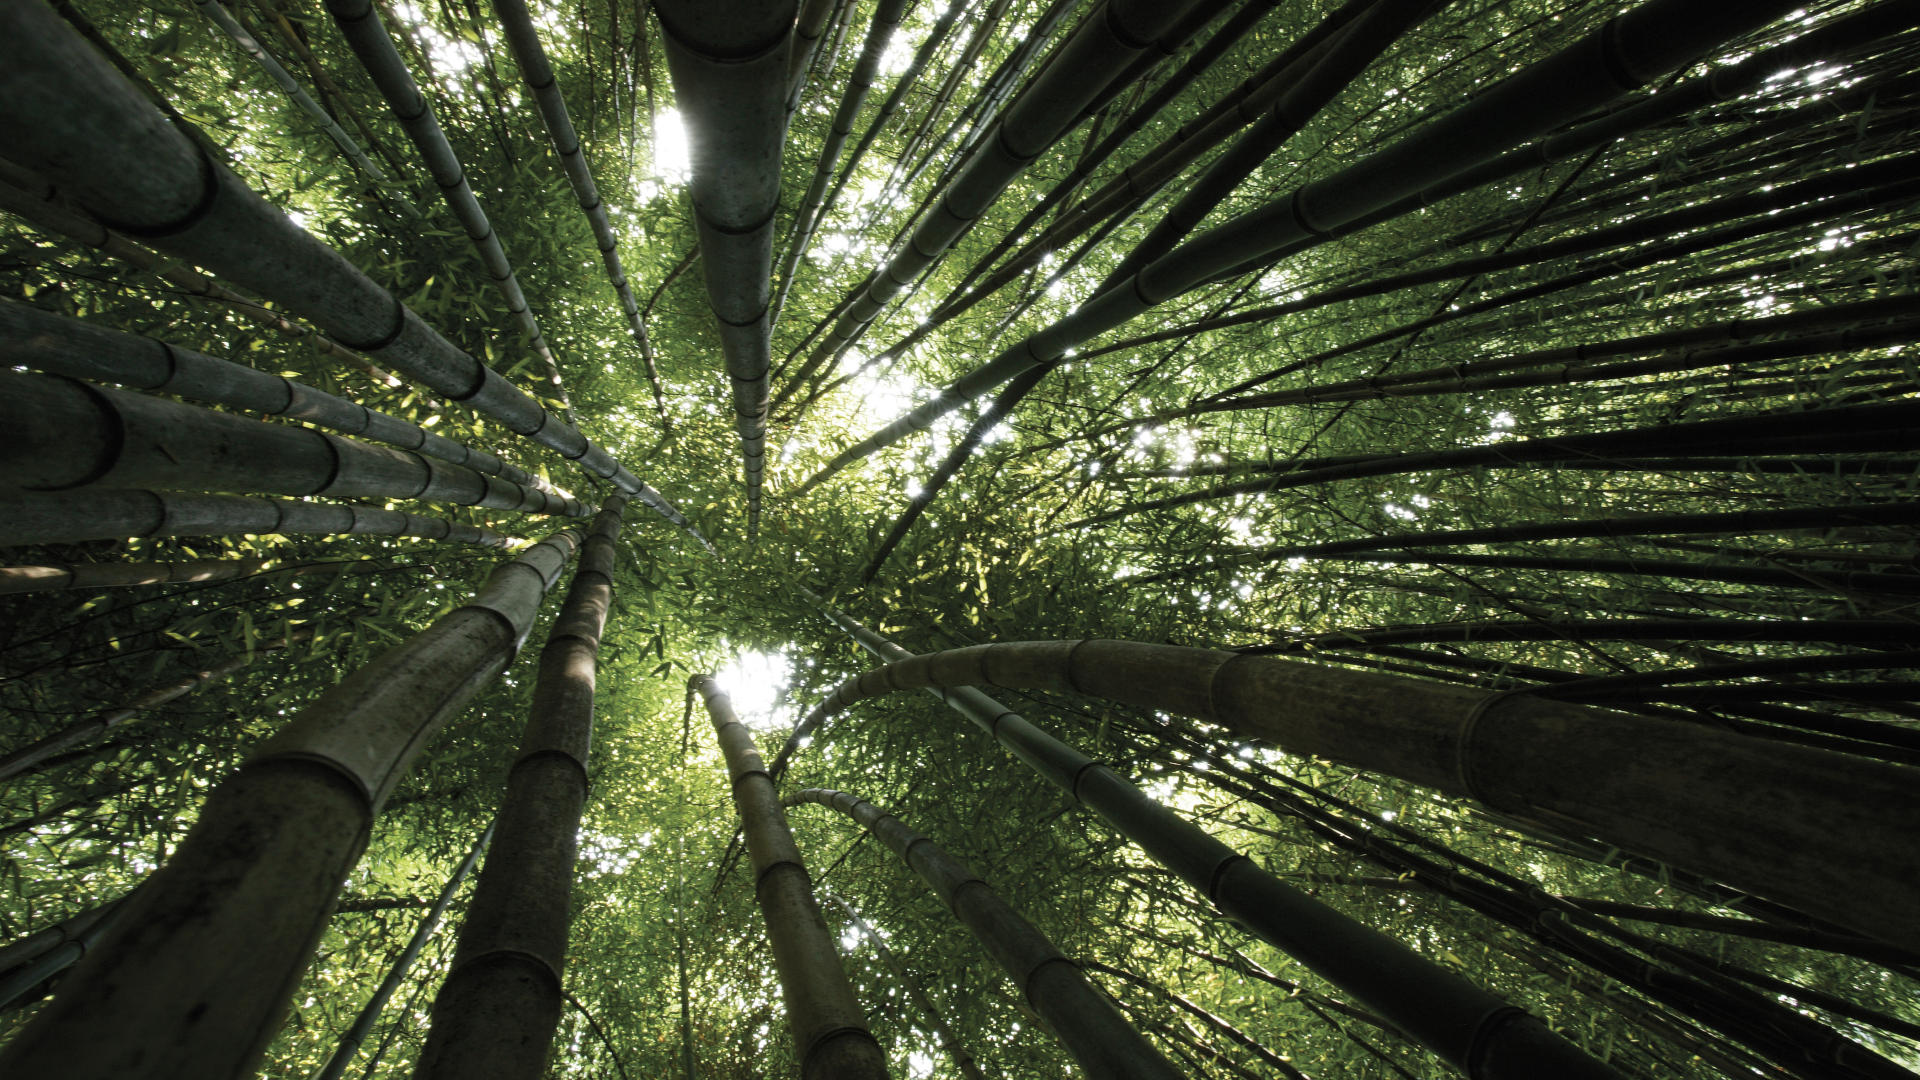 160425 descargar imagen bosque, tierra/naturaleza, bambú: fondos de pantalla y protectores de pantalla gratis